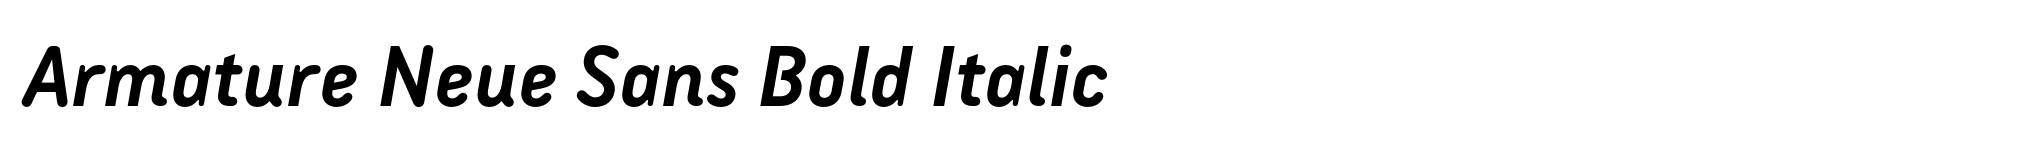 Armature Neue Sans Bold Italic image